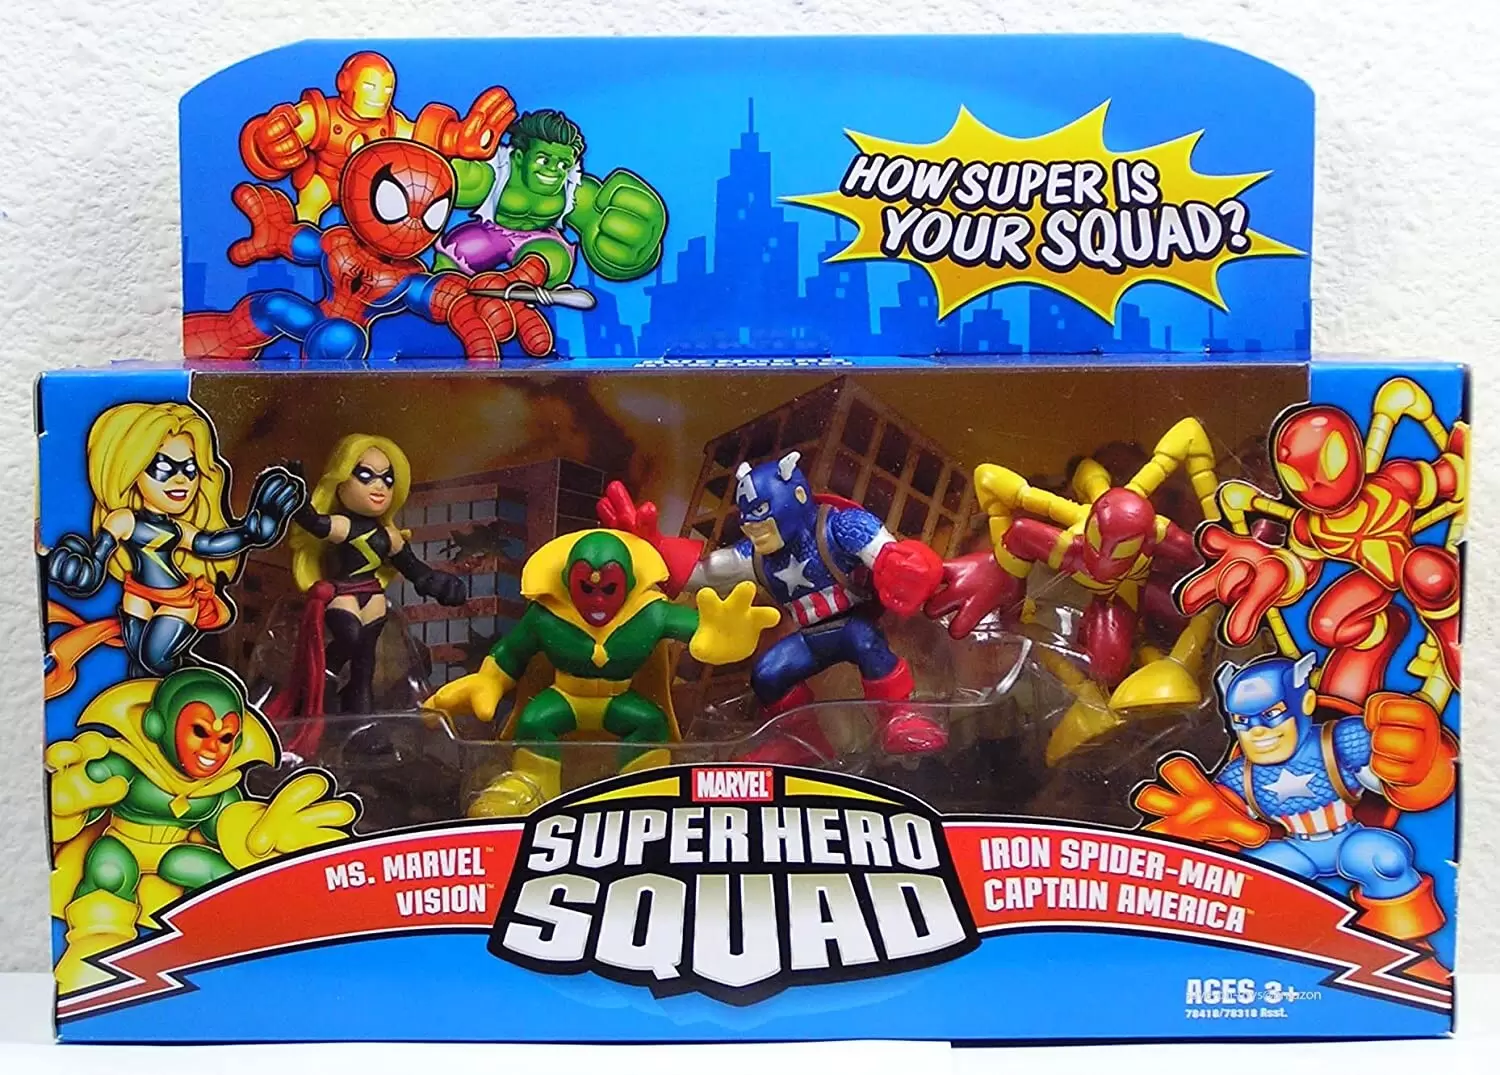 Marvel Super Hero Squad Action Figures - Avengers Assemble 4 Pack